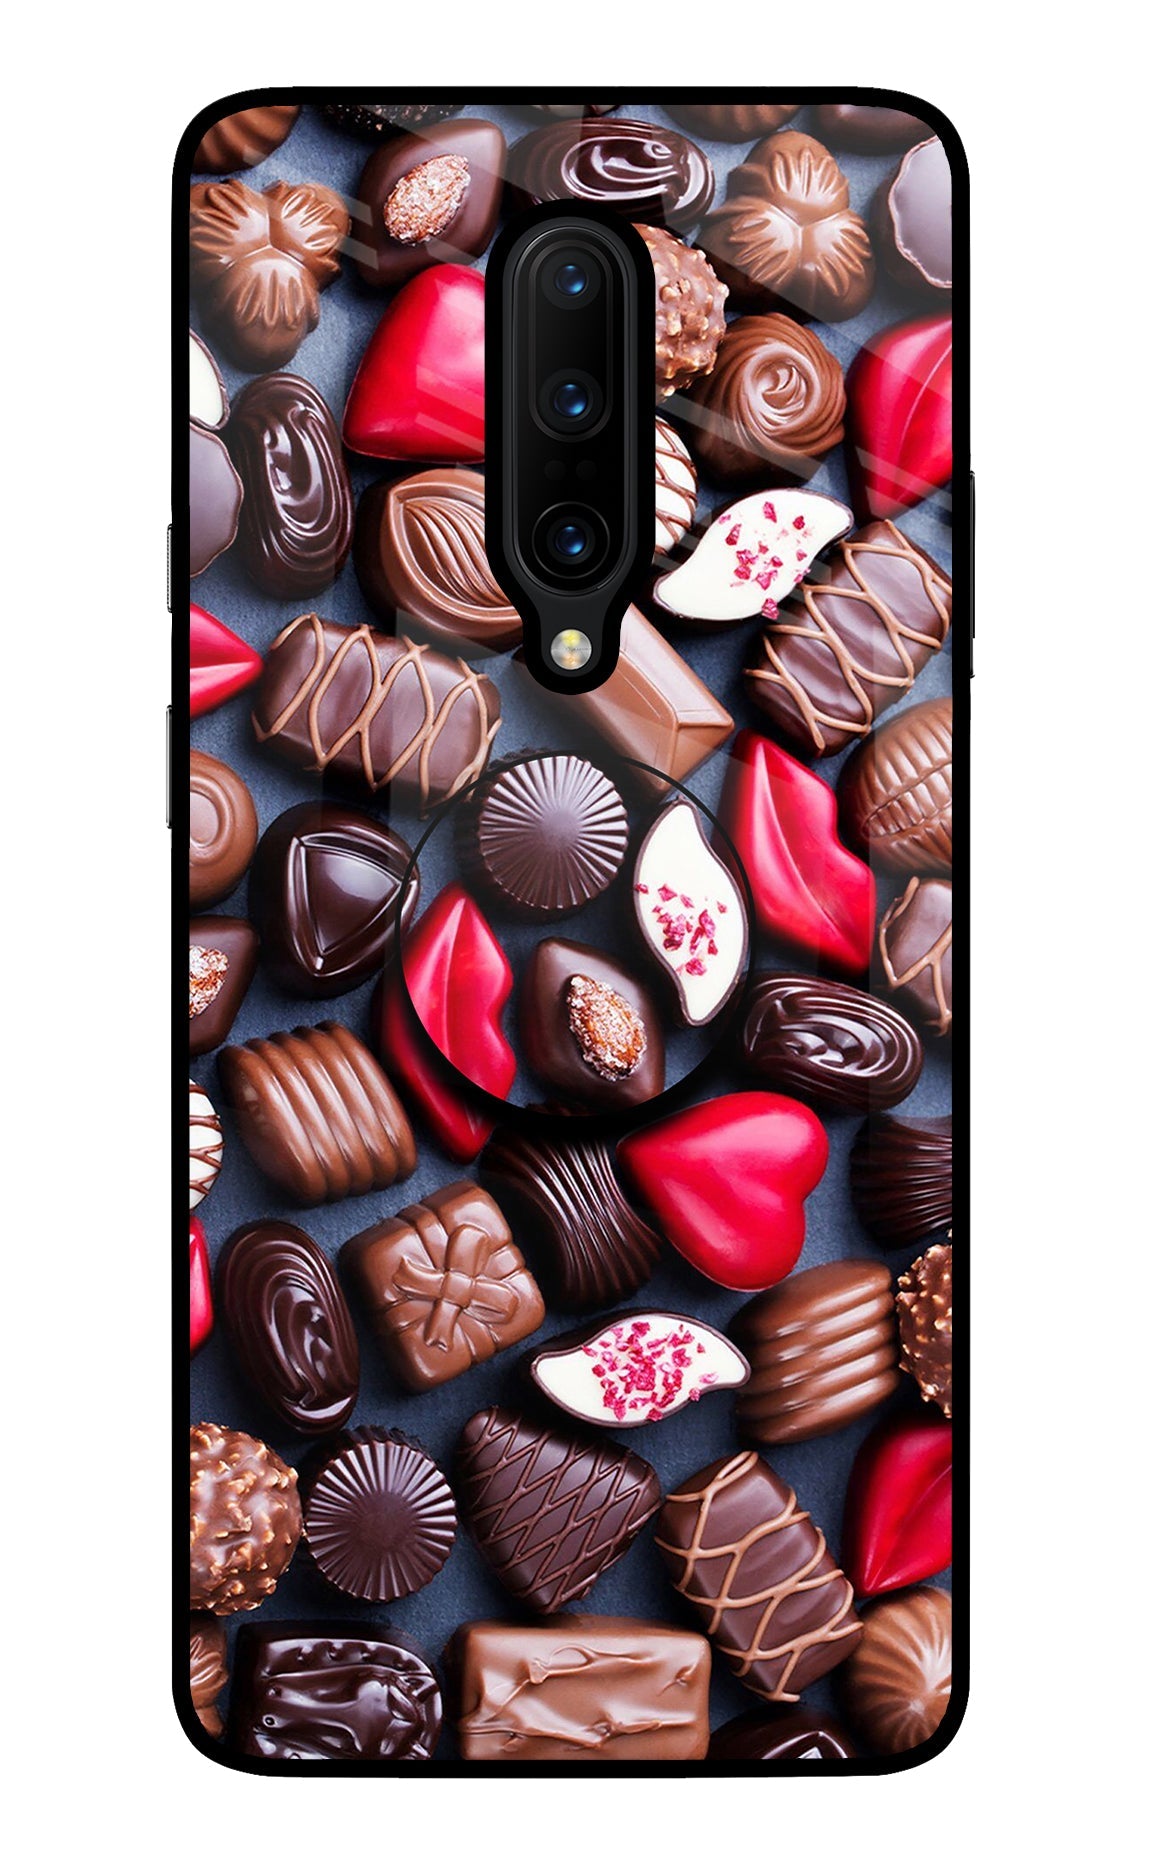 Chocolates Oneplus 7 Pro Glass Case